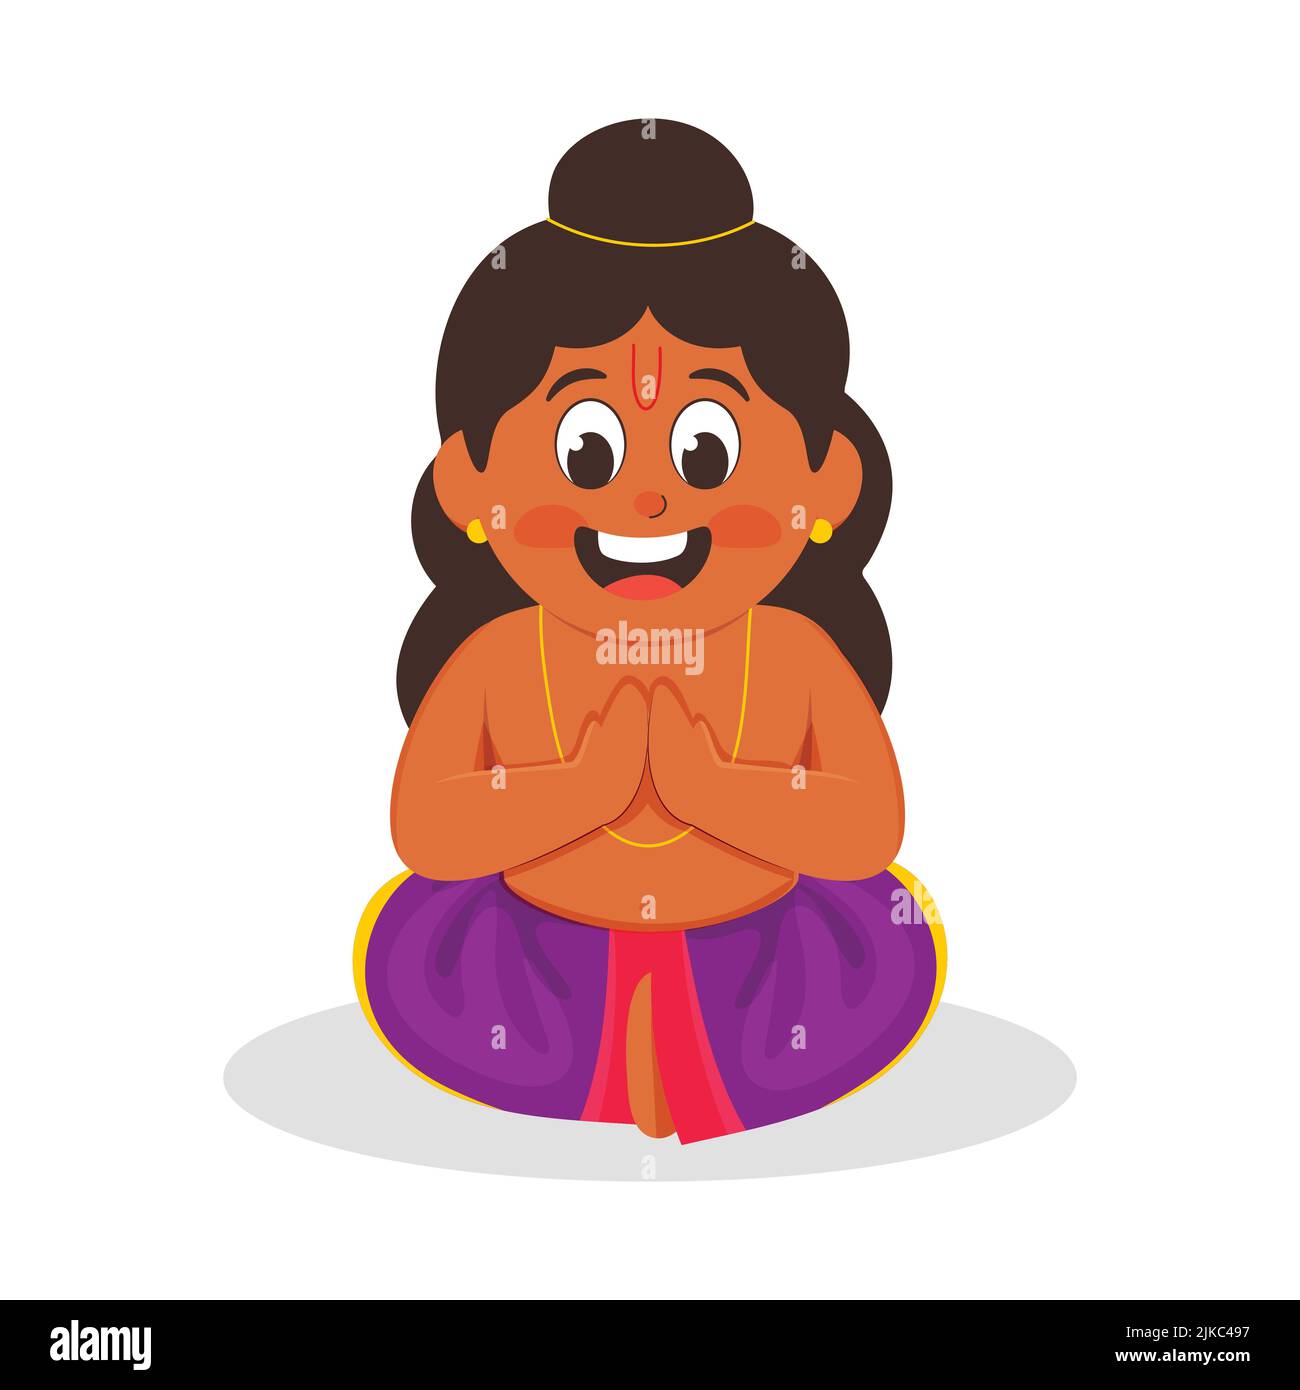 Illustration Of Cheerful Boy Wearing Sadhu (Sage) Costume In Sitting Pose. Stock Vector